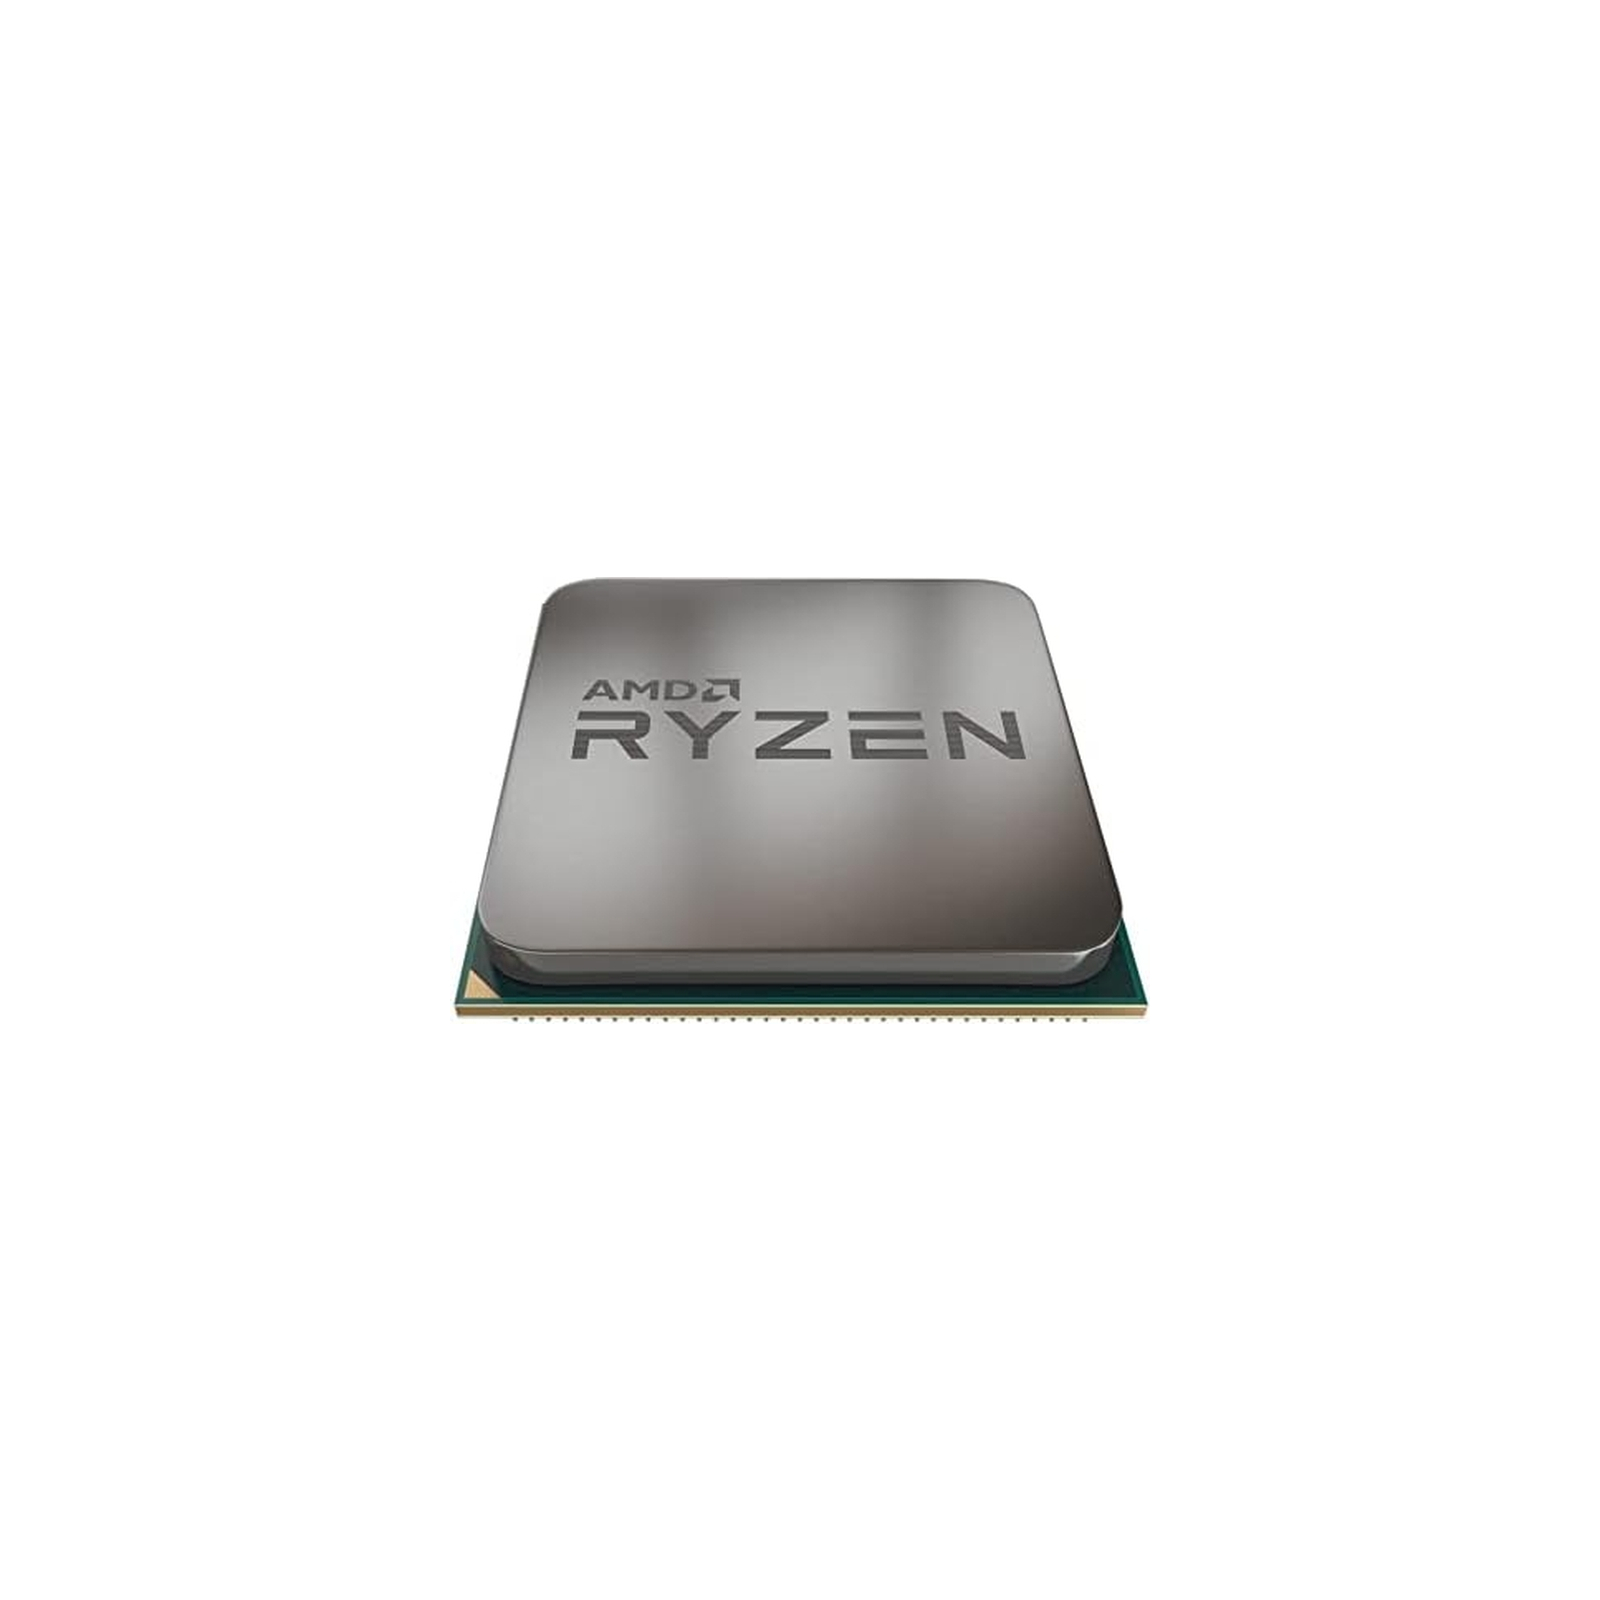 Процессор AMD Ryzen 3 3200G (YD320GC5FHBOX)